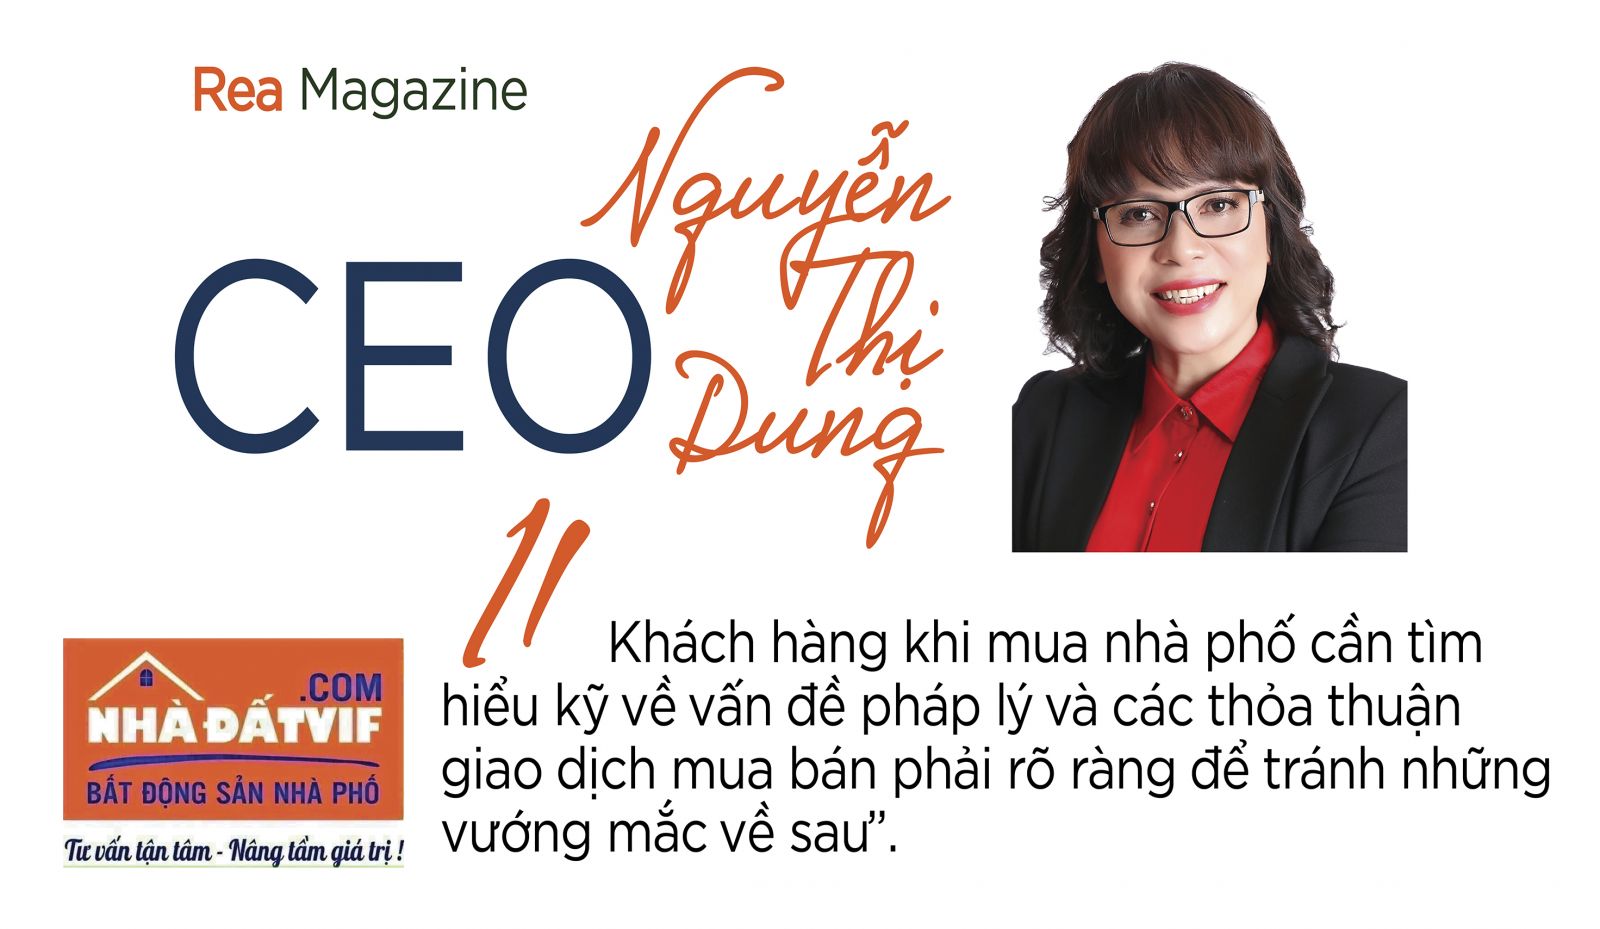 CEO Nguyễn Thị Dung.